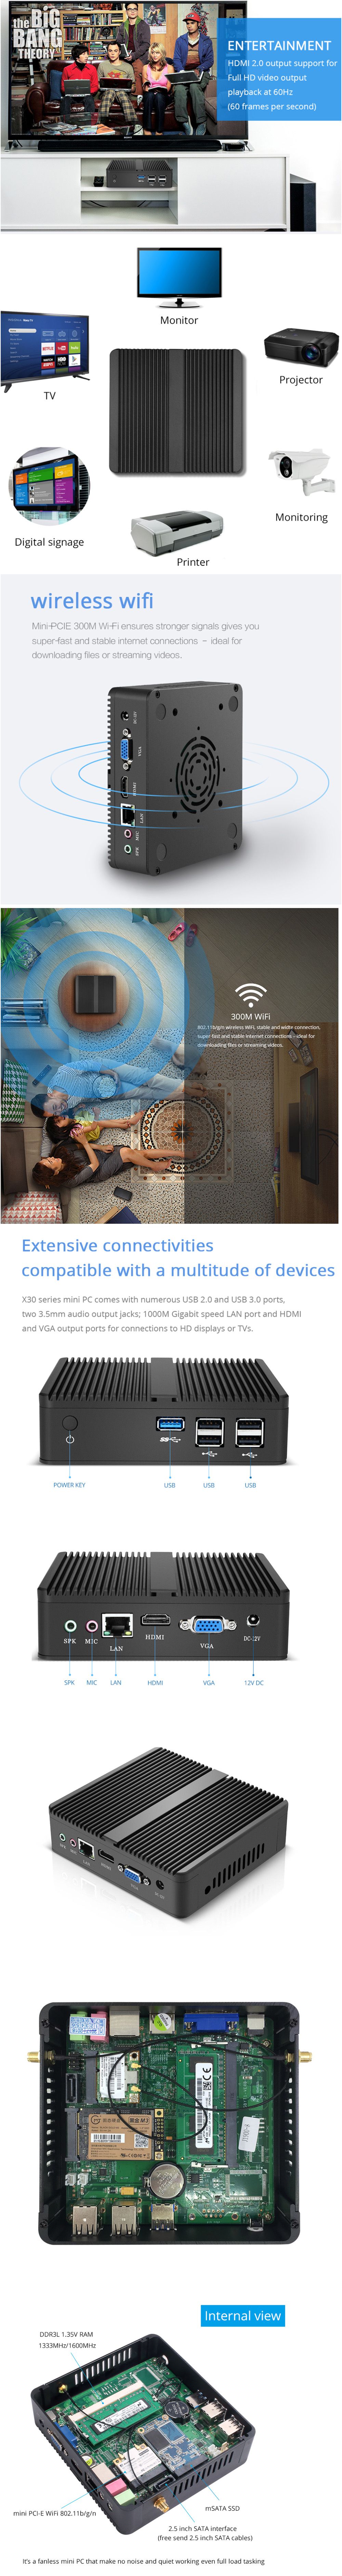 XCY-X30-Mini-PC-Computer-Intel-Celeron-2955U-Barebone-Quad-Core-Win-10-Desktops-Office-HTPC-VGA-HDMI-1480686